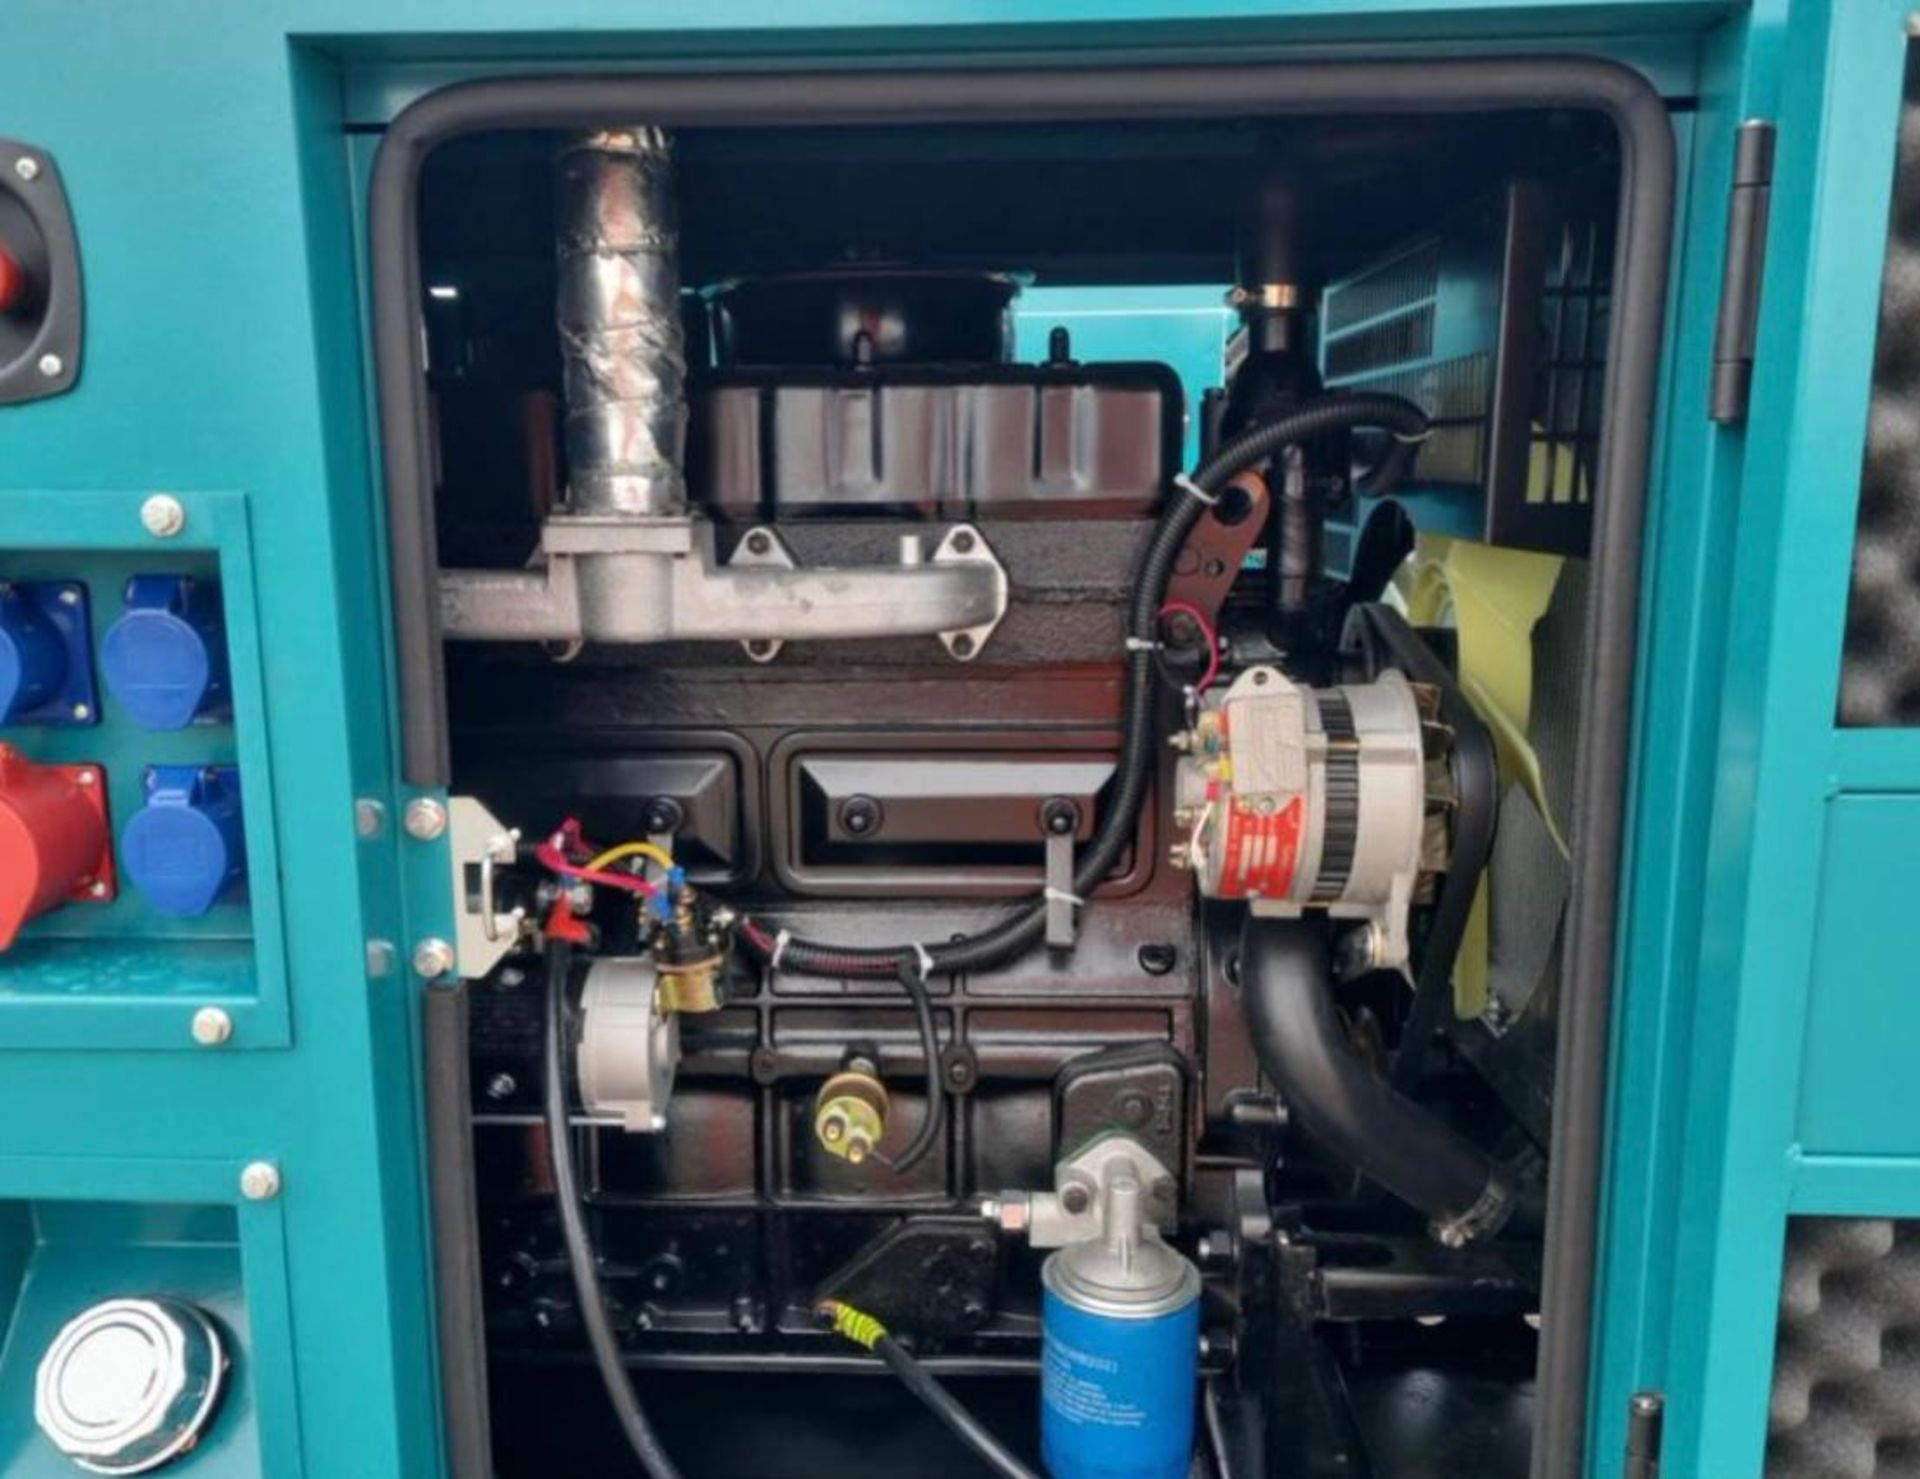 Unused Damatt 41KvA Diesel Generator *PLUS VAT* - Image 4 of 6